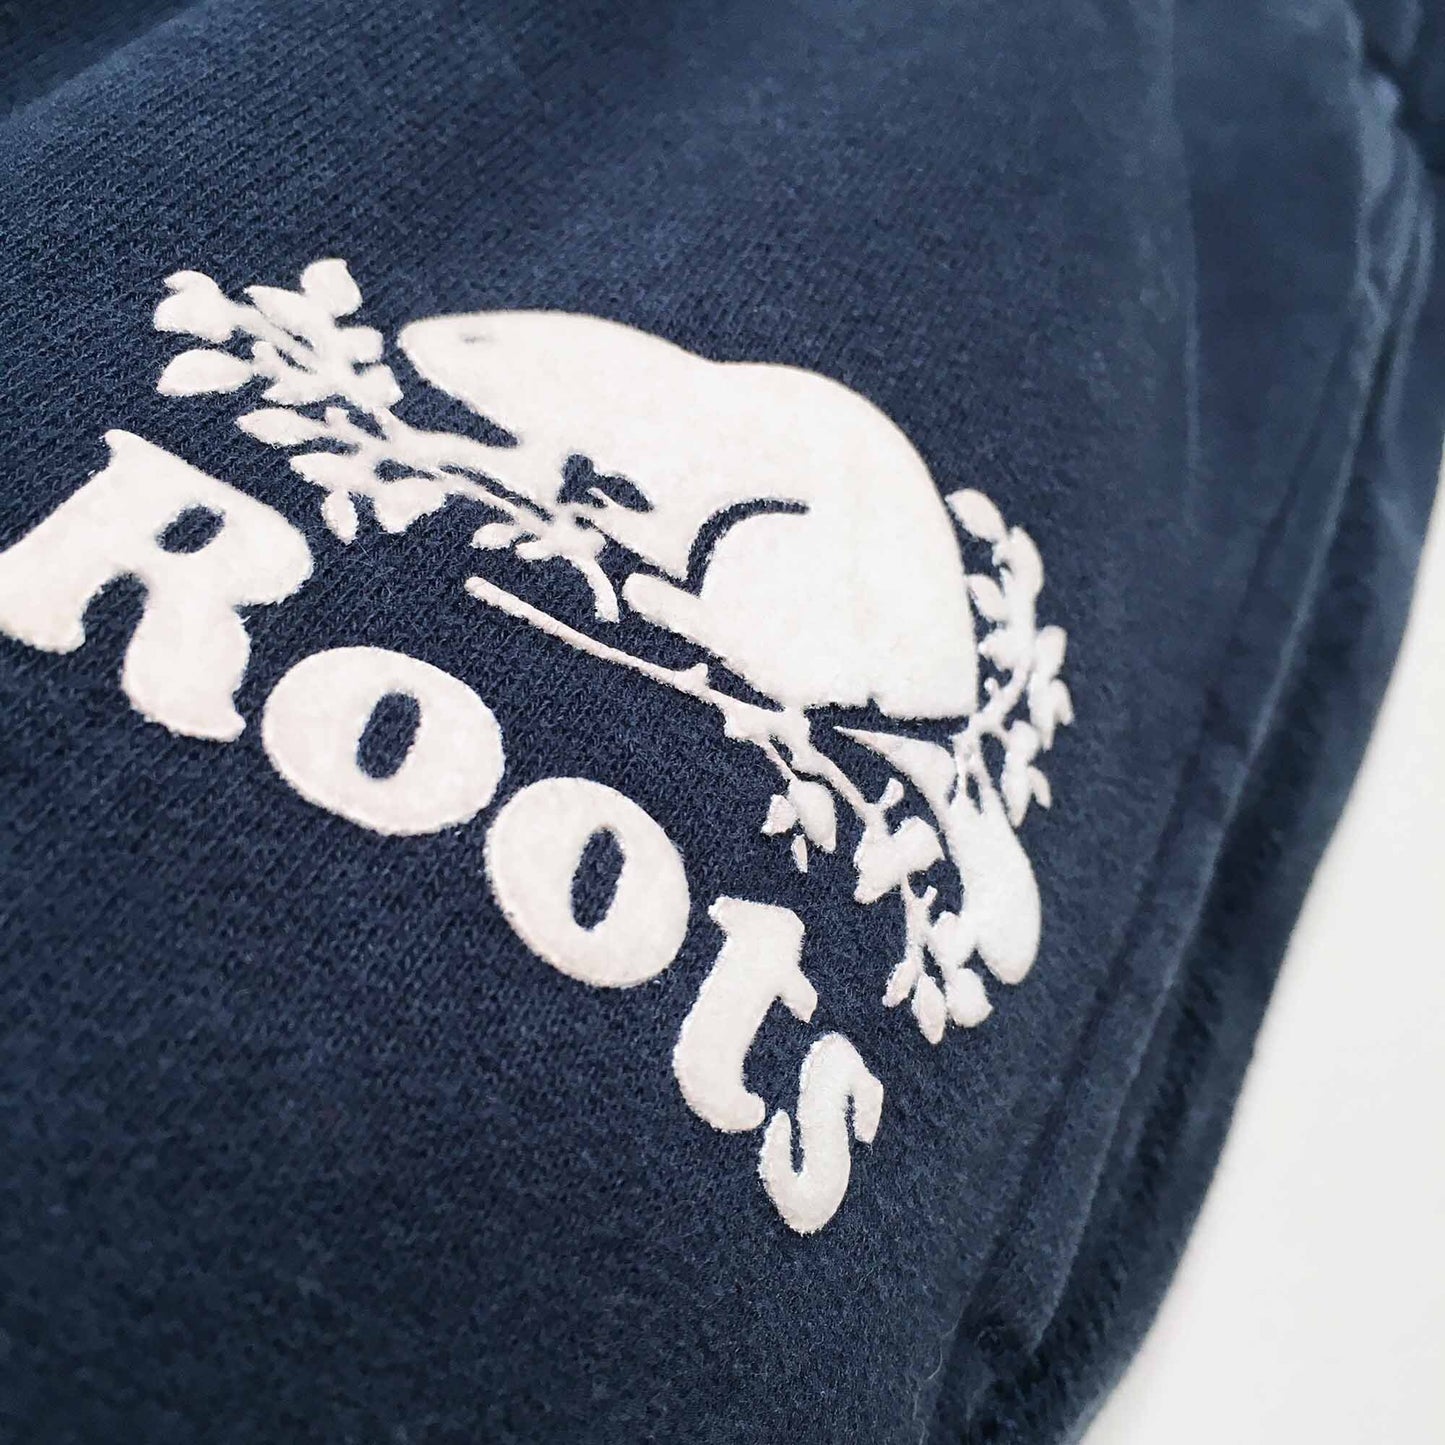 Roots kids original sweatpants - size Youth Large